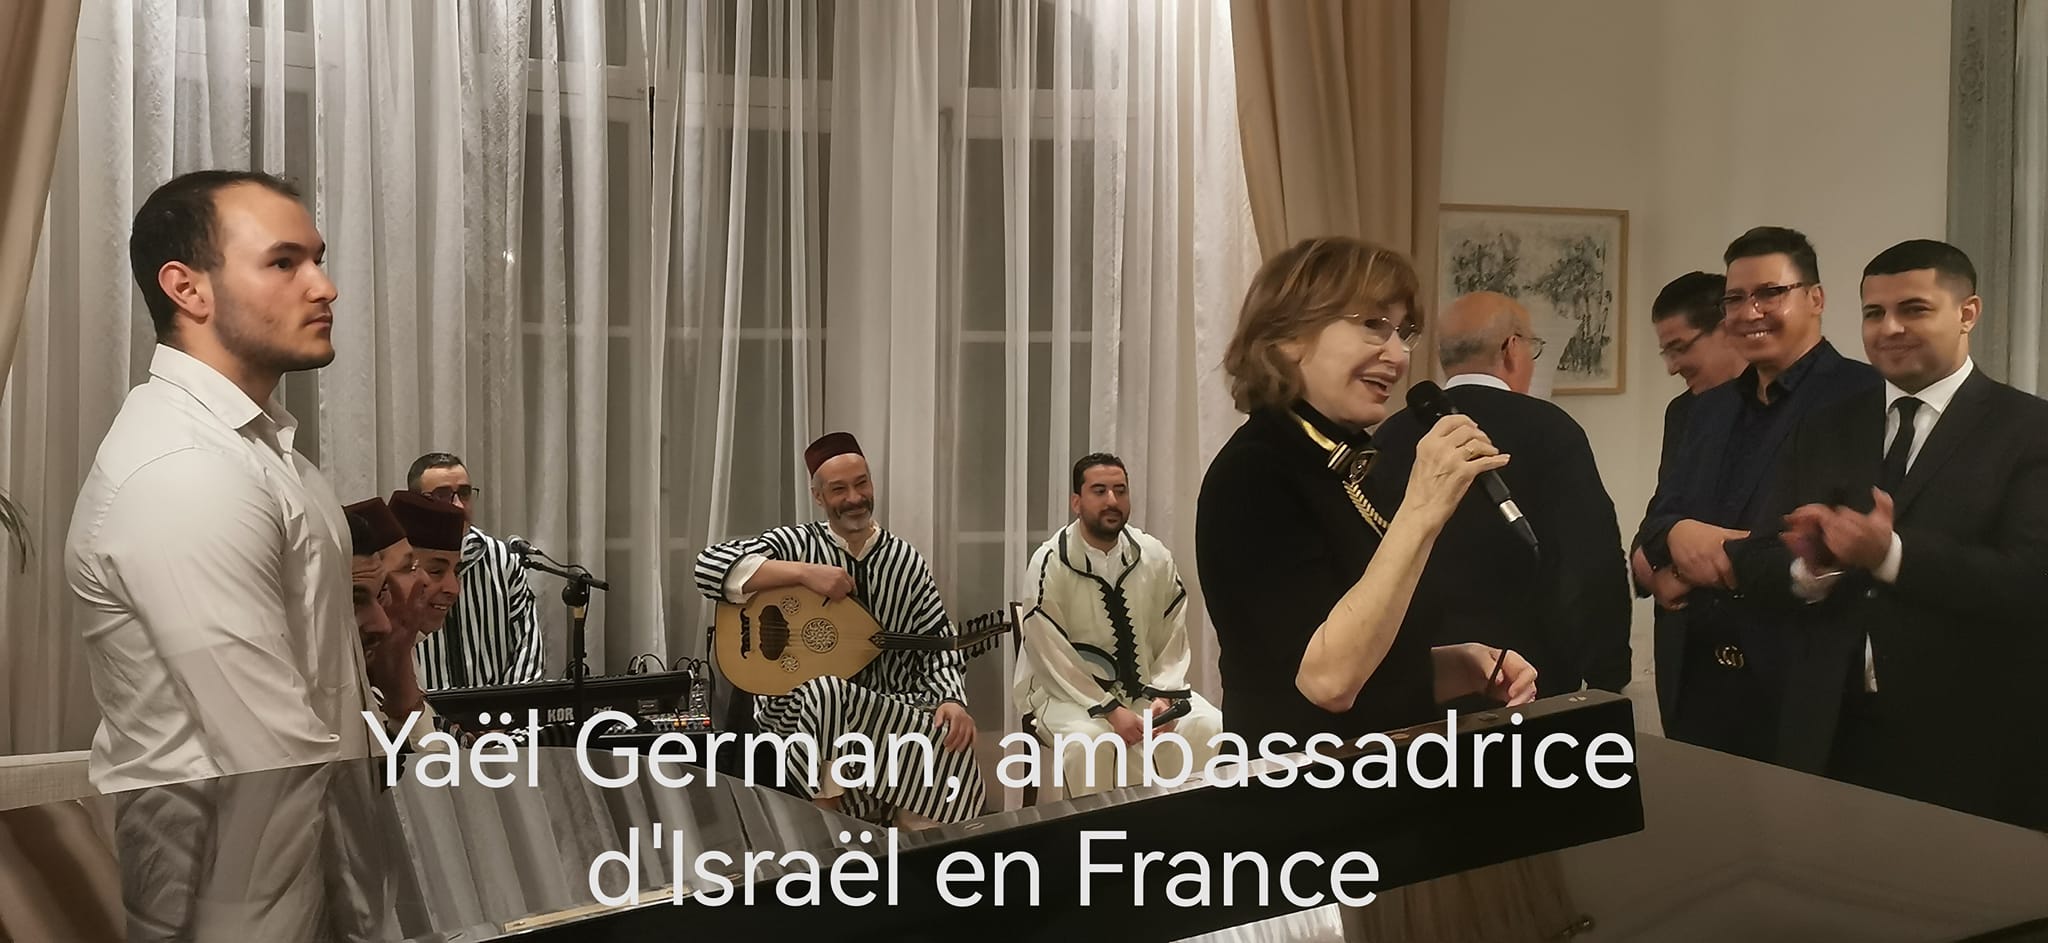 Mimouna chez l'ambassadrice d'Israël en France, avec l'orchestre marocain Attarab al-Assil, 24 avril 2022 ©Association France-Israel